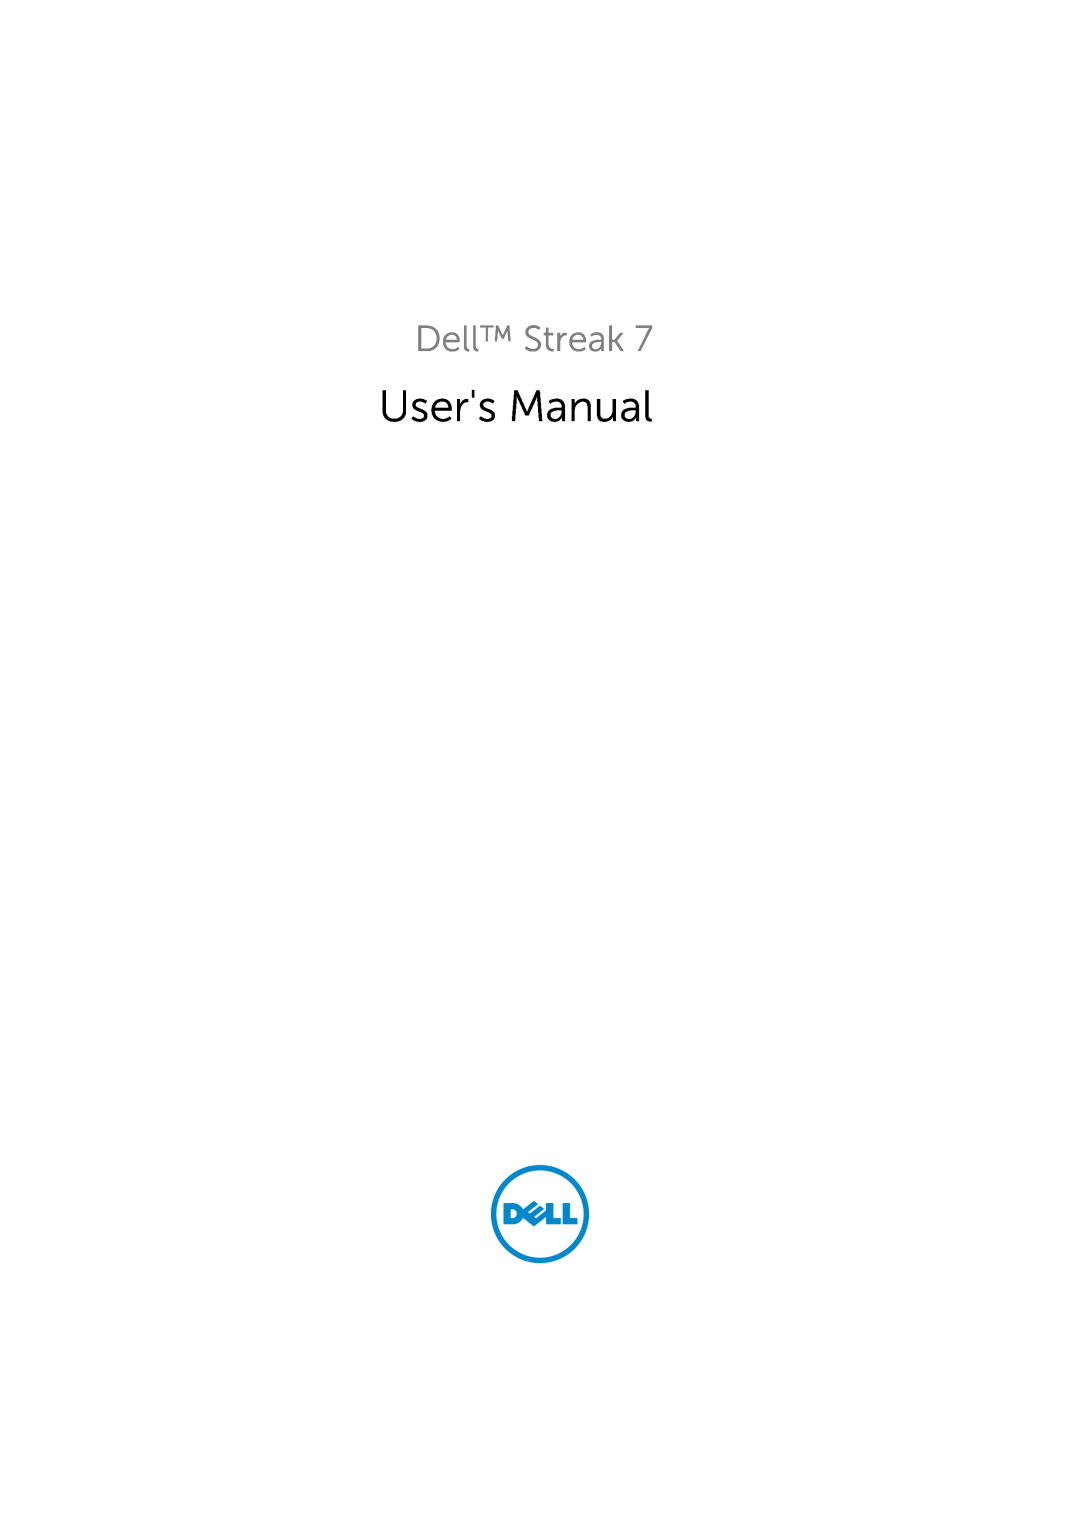 Dell LG7_bk0 user manual Users Manual, Dell Streak, Comment 